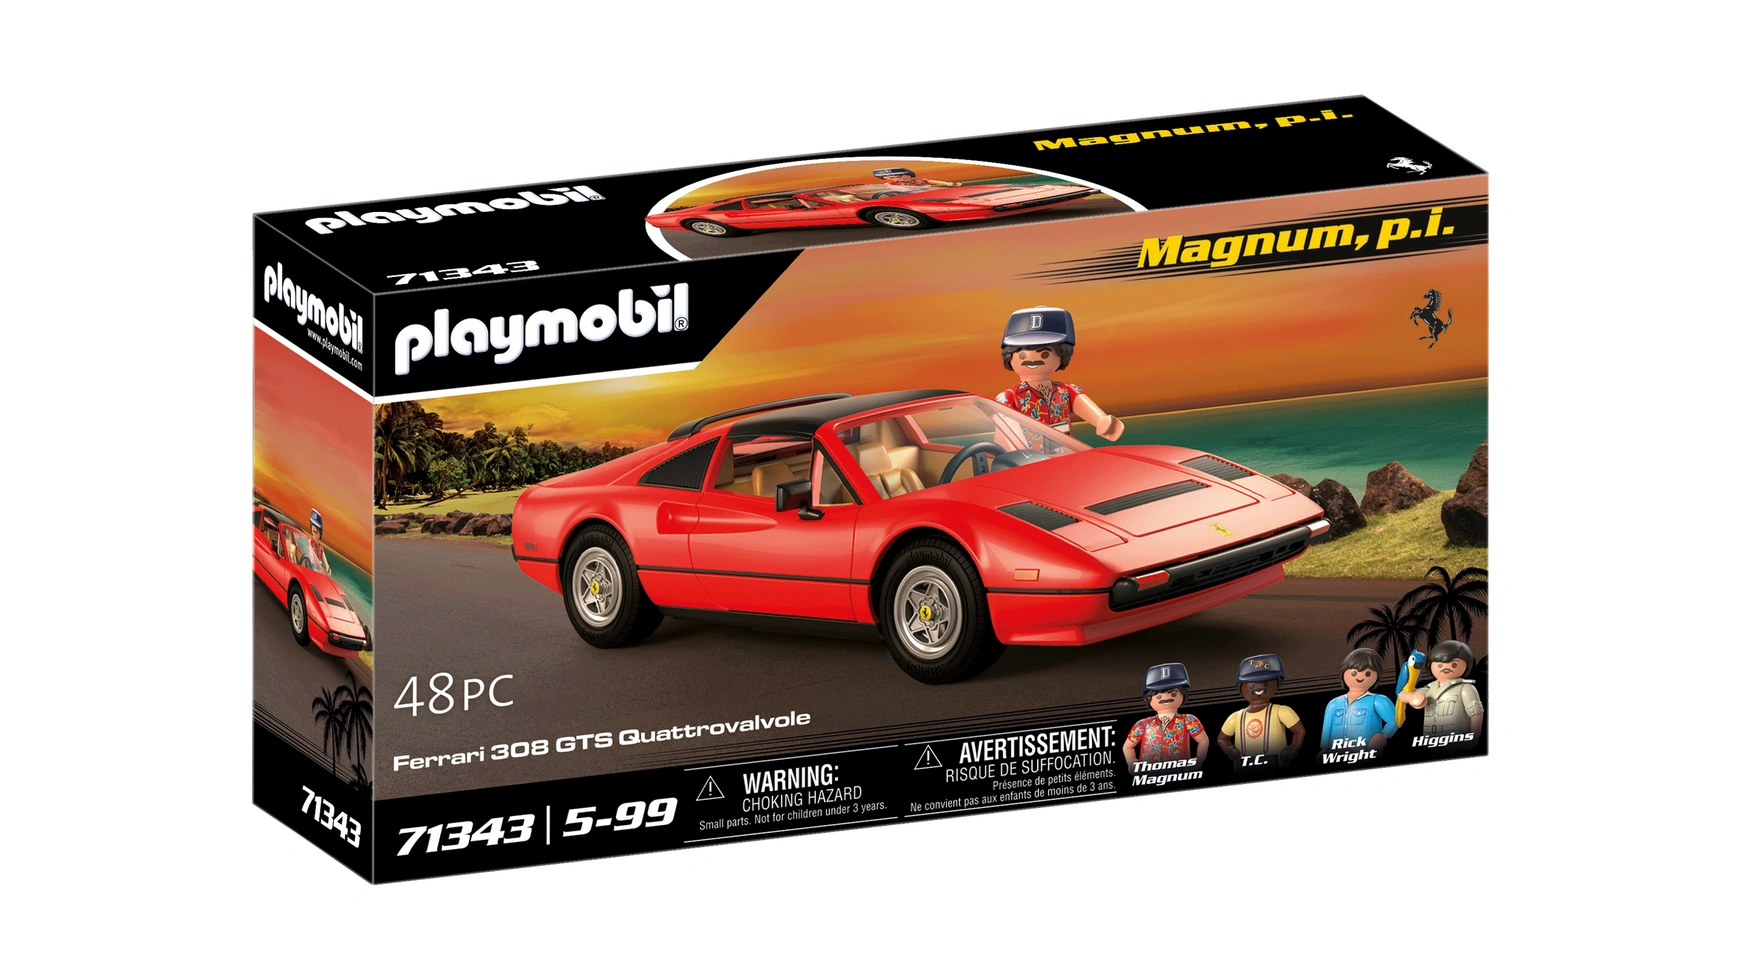 Magnum, шт феррари 308 gts кваттровалволе Playmobil